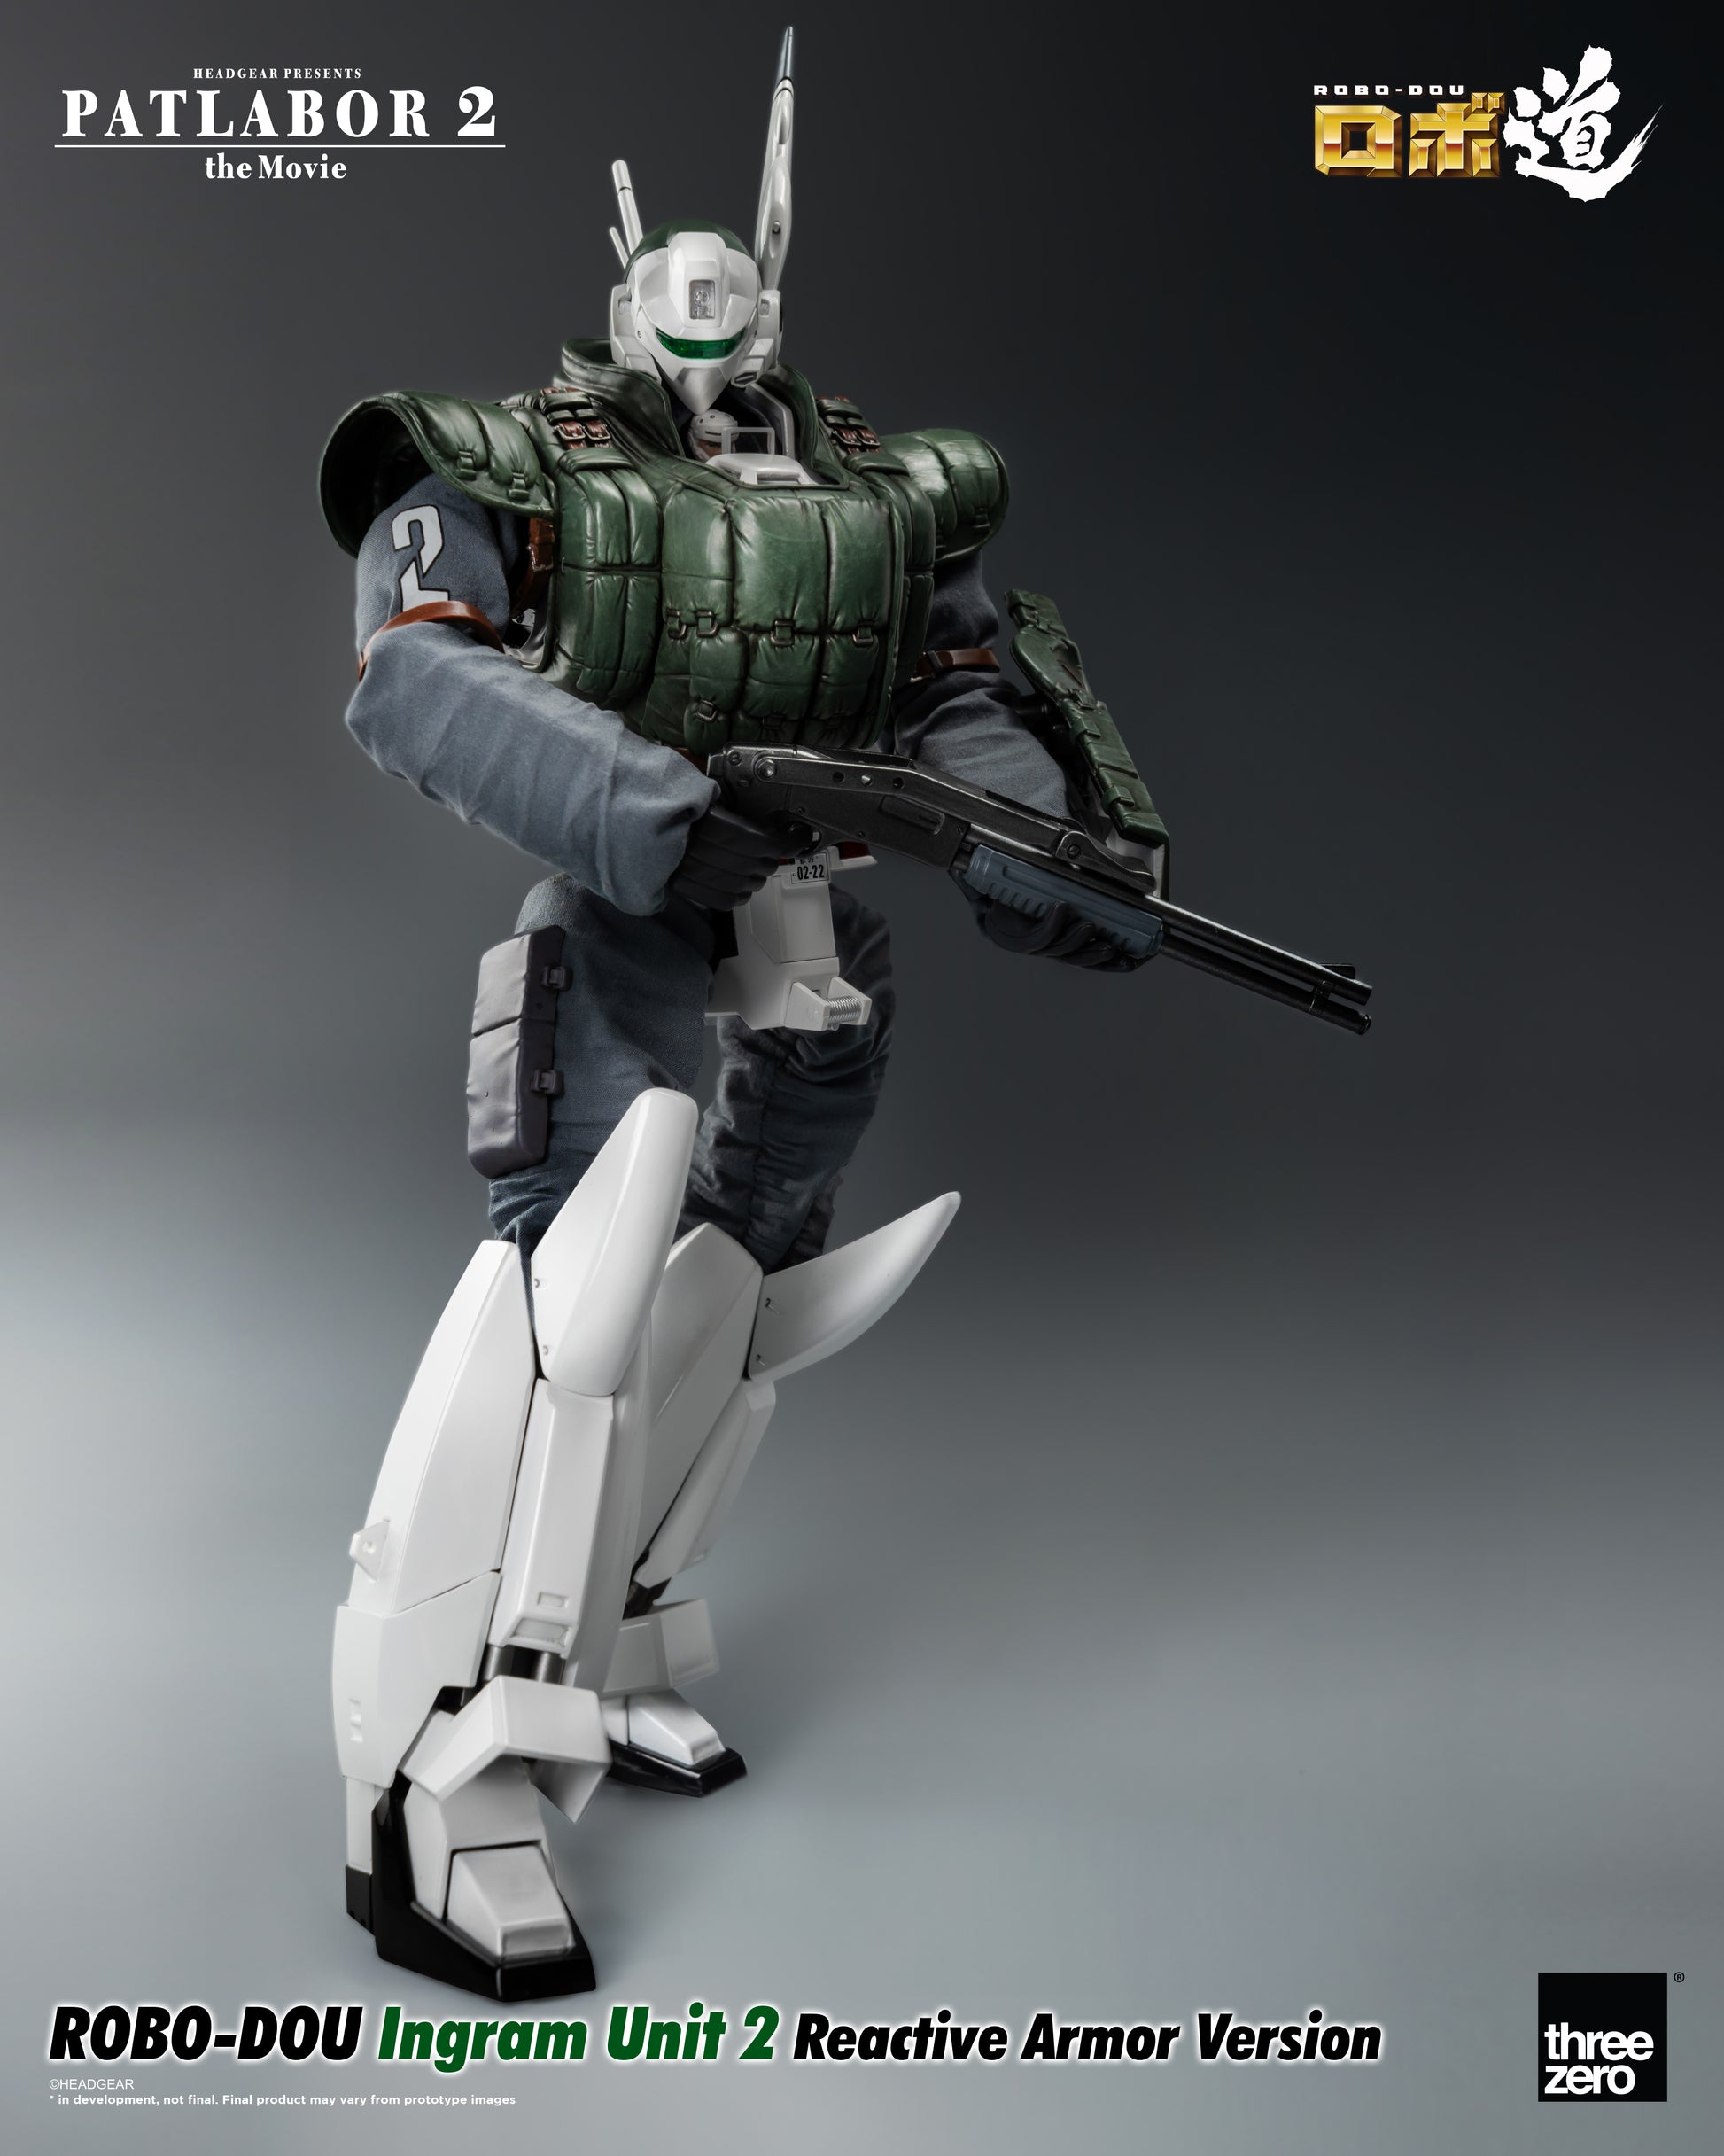 Patlabor 2: The Movie - ROBO-DOU Ingram Unit 2 Reactive Armor Version holding shot gun pointing left